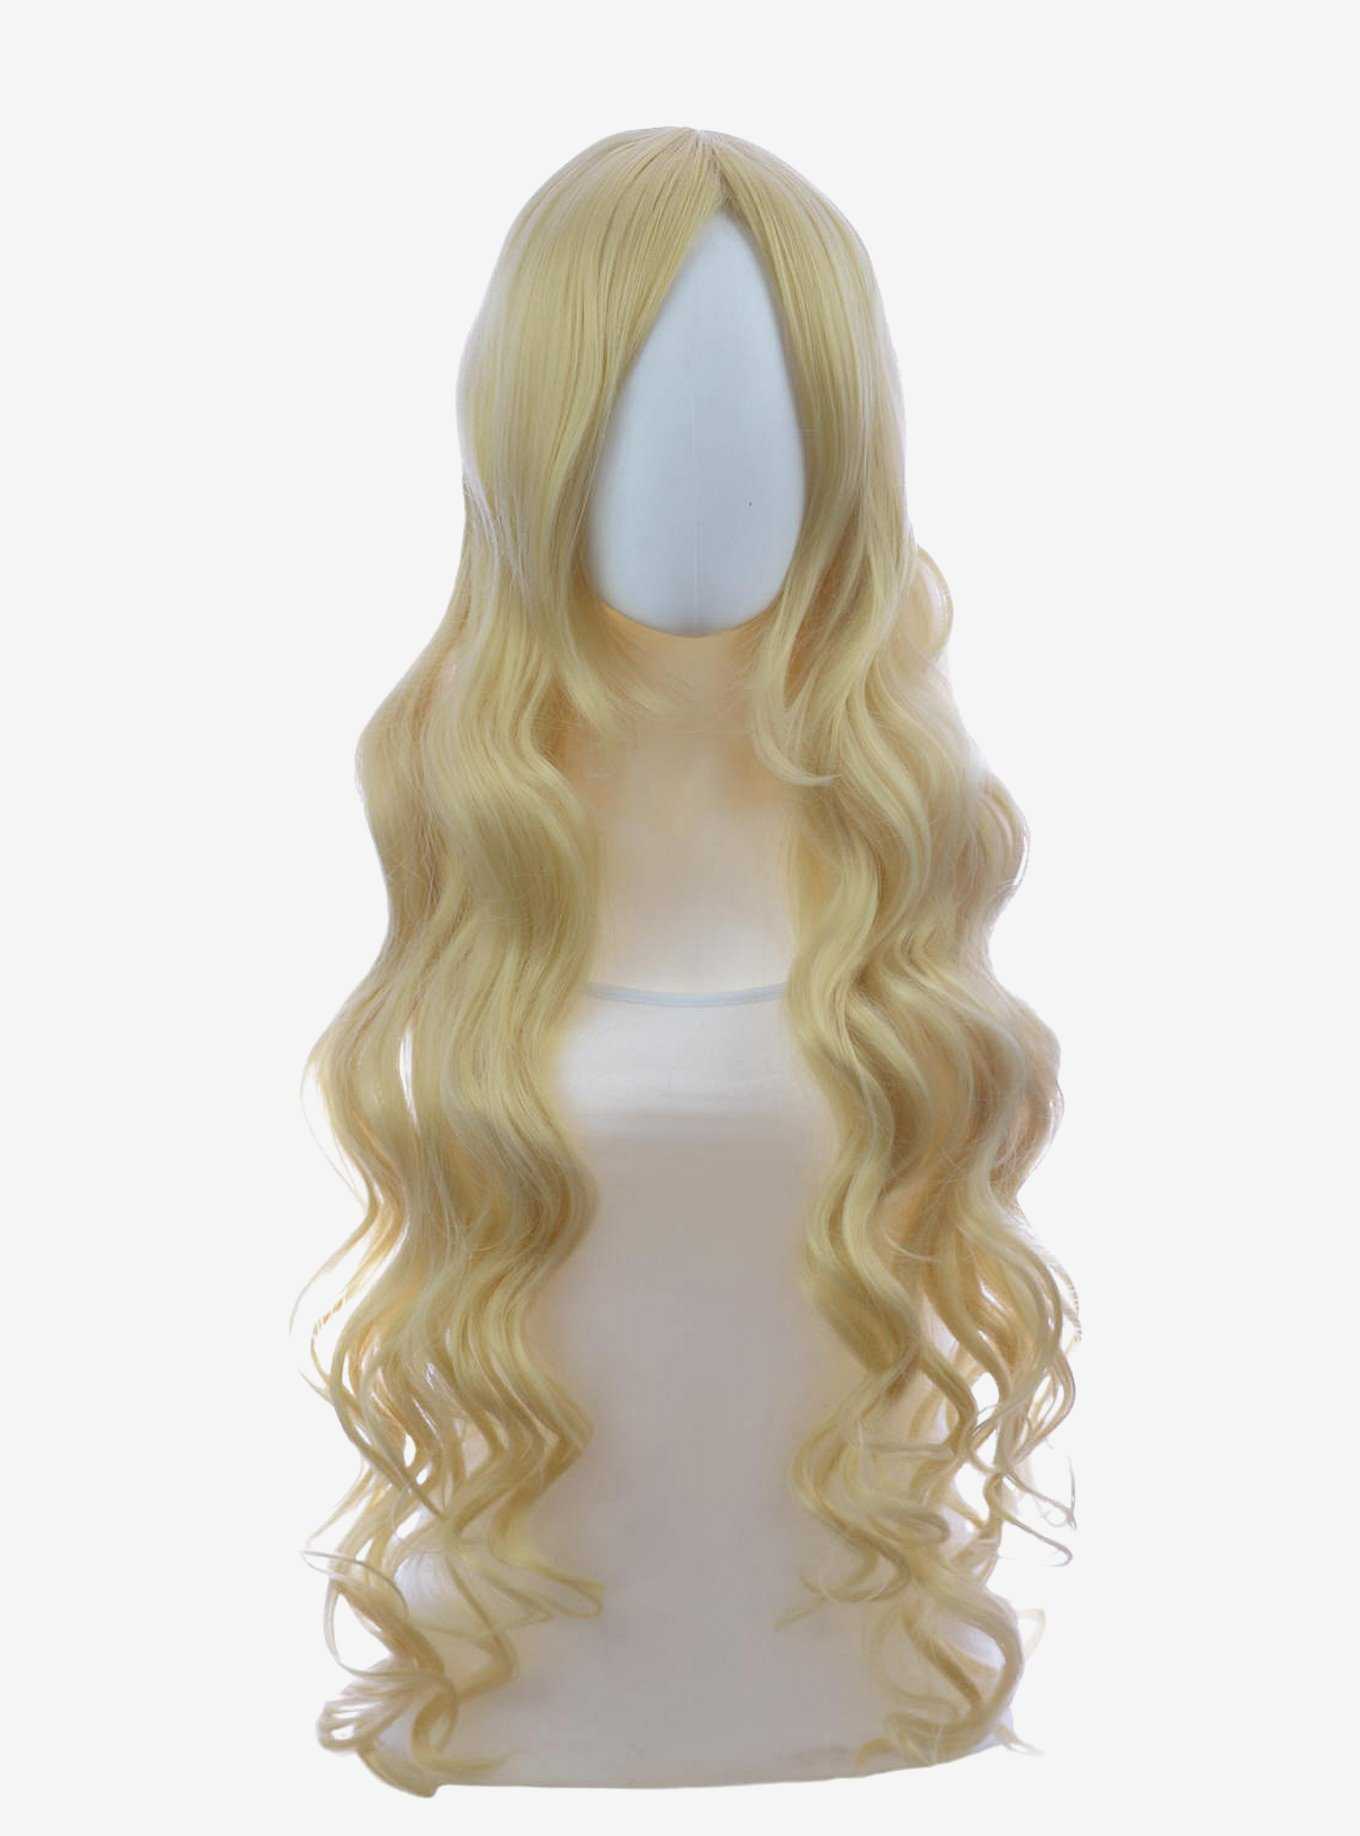 Epic Cosplay Hera Natural Blonde Long Curly Wig, , hi-res